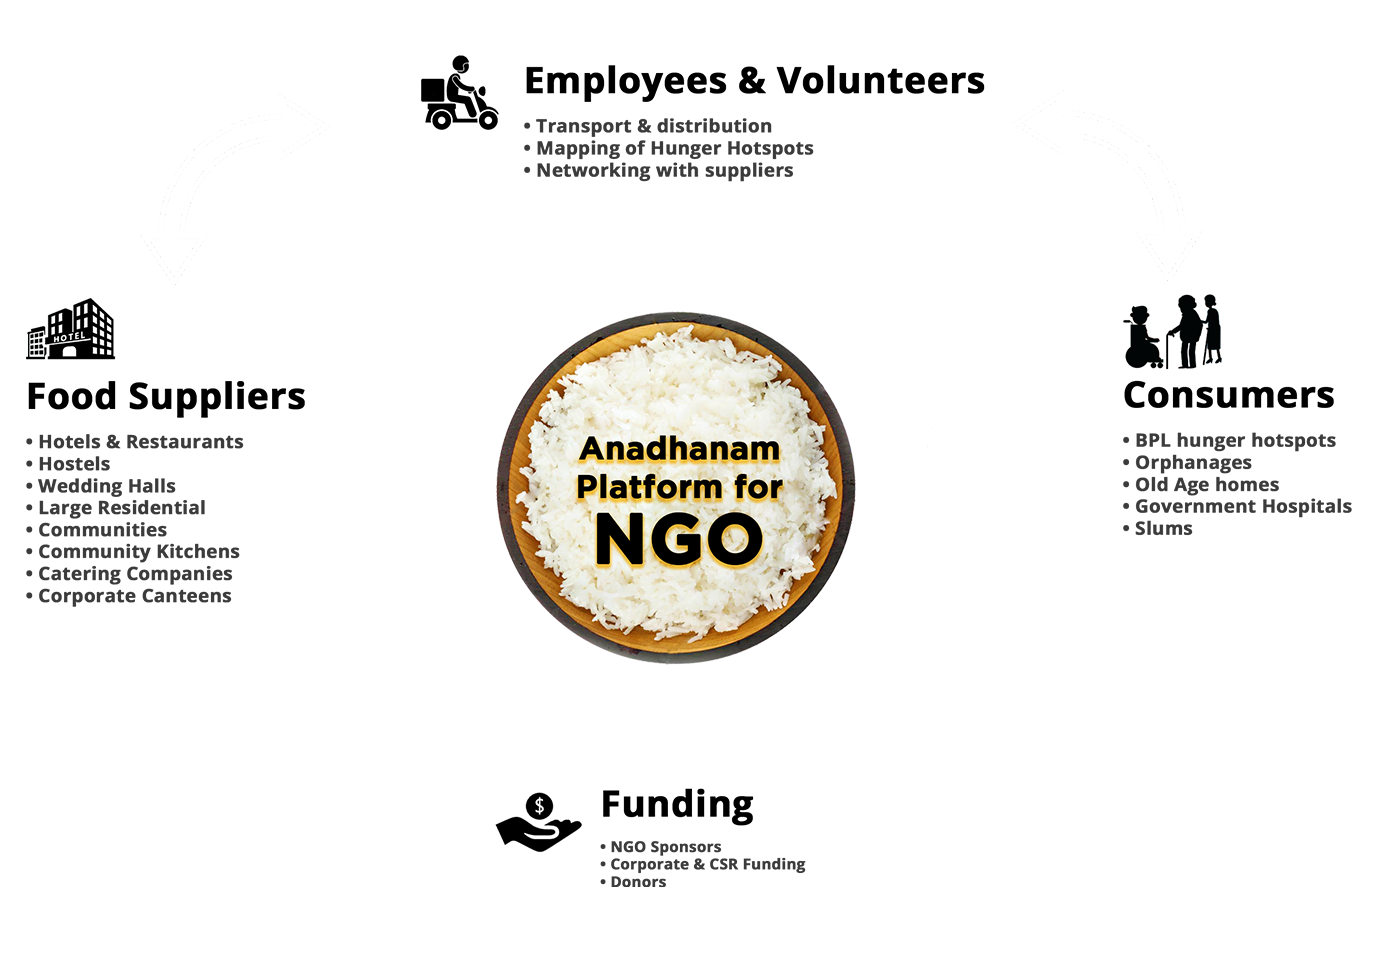 Anadhanam Platform for NGO